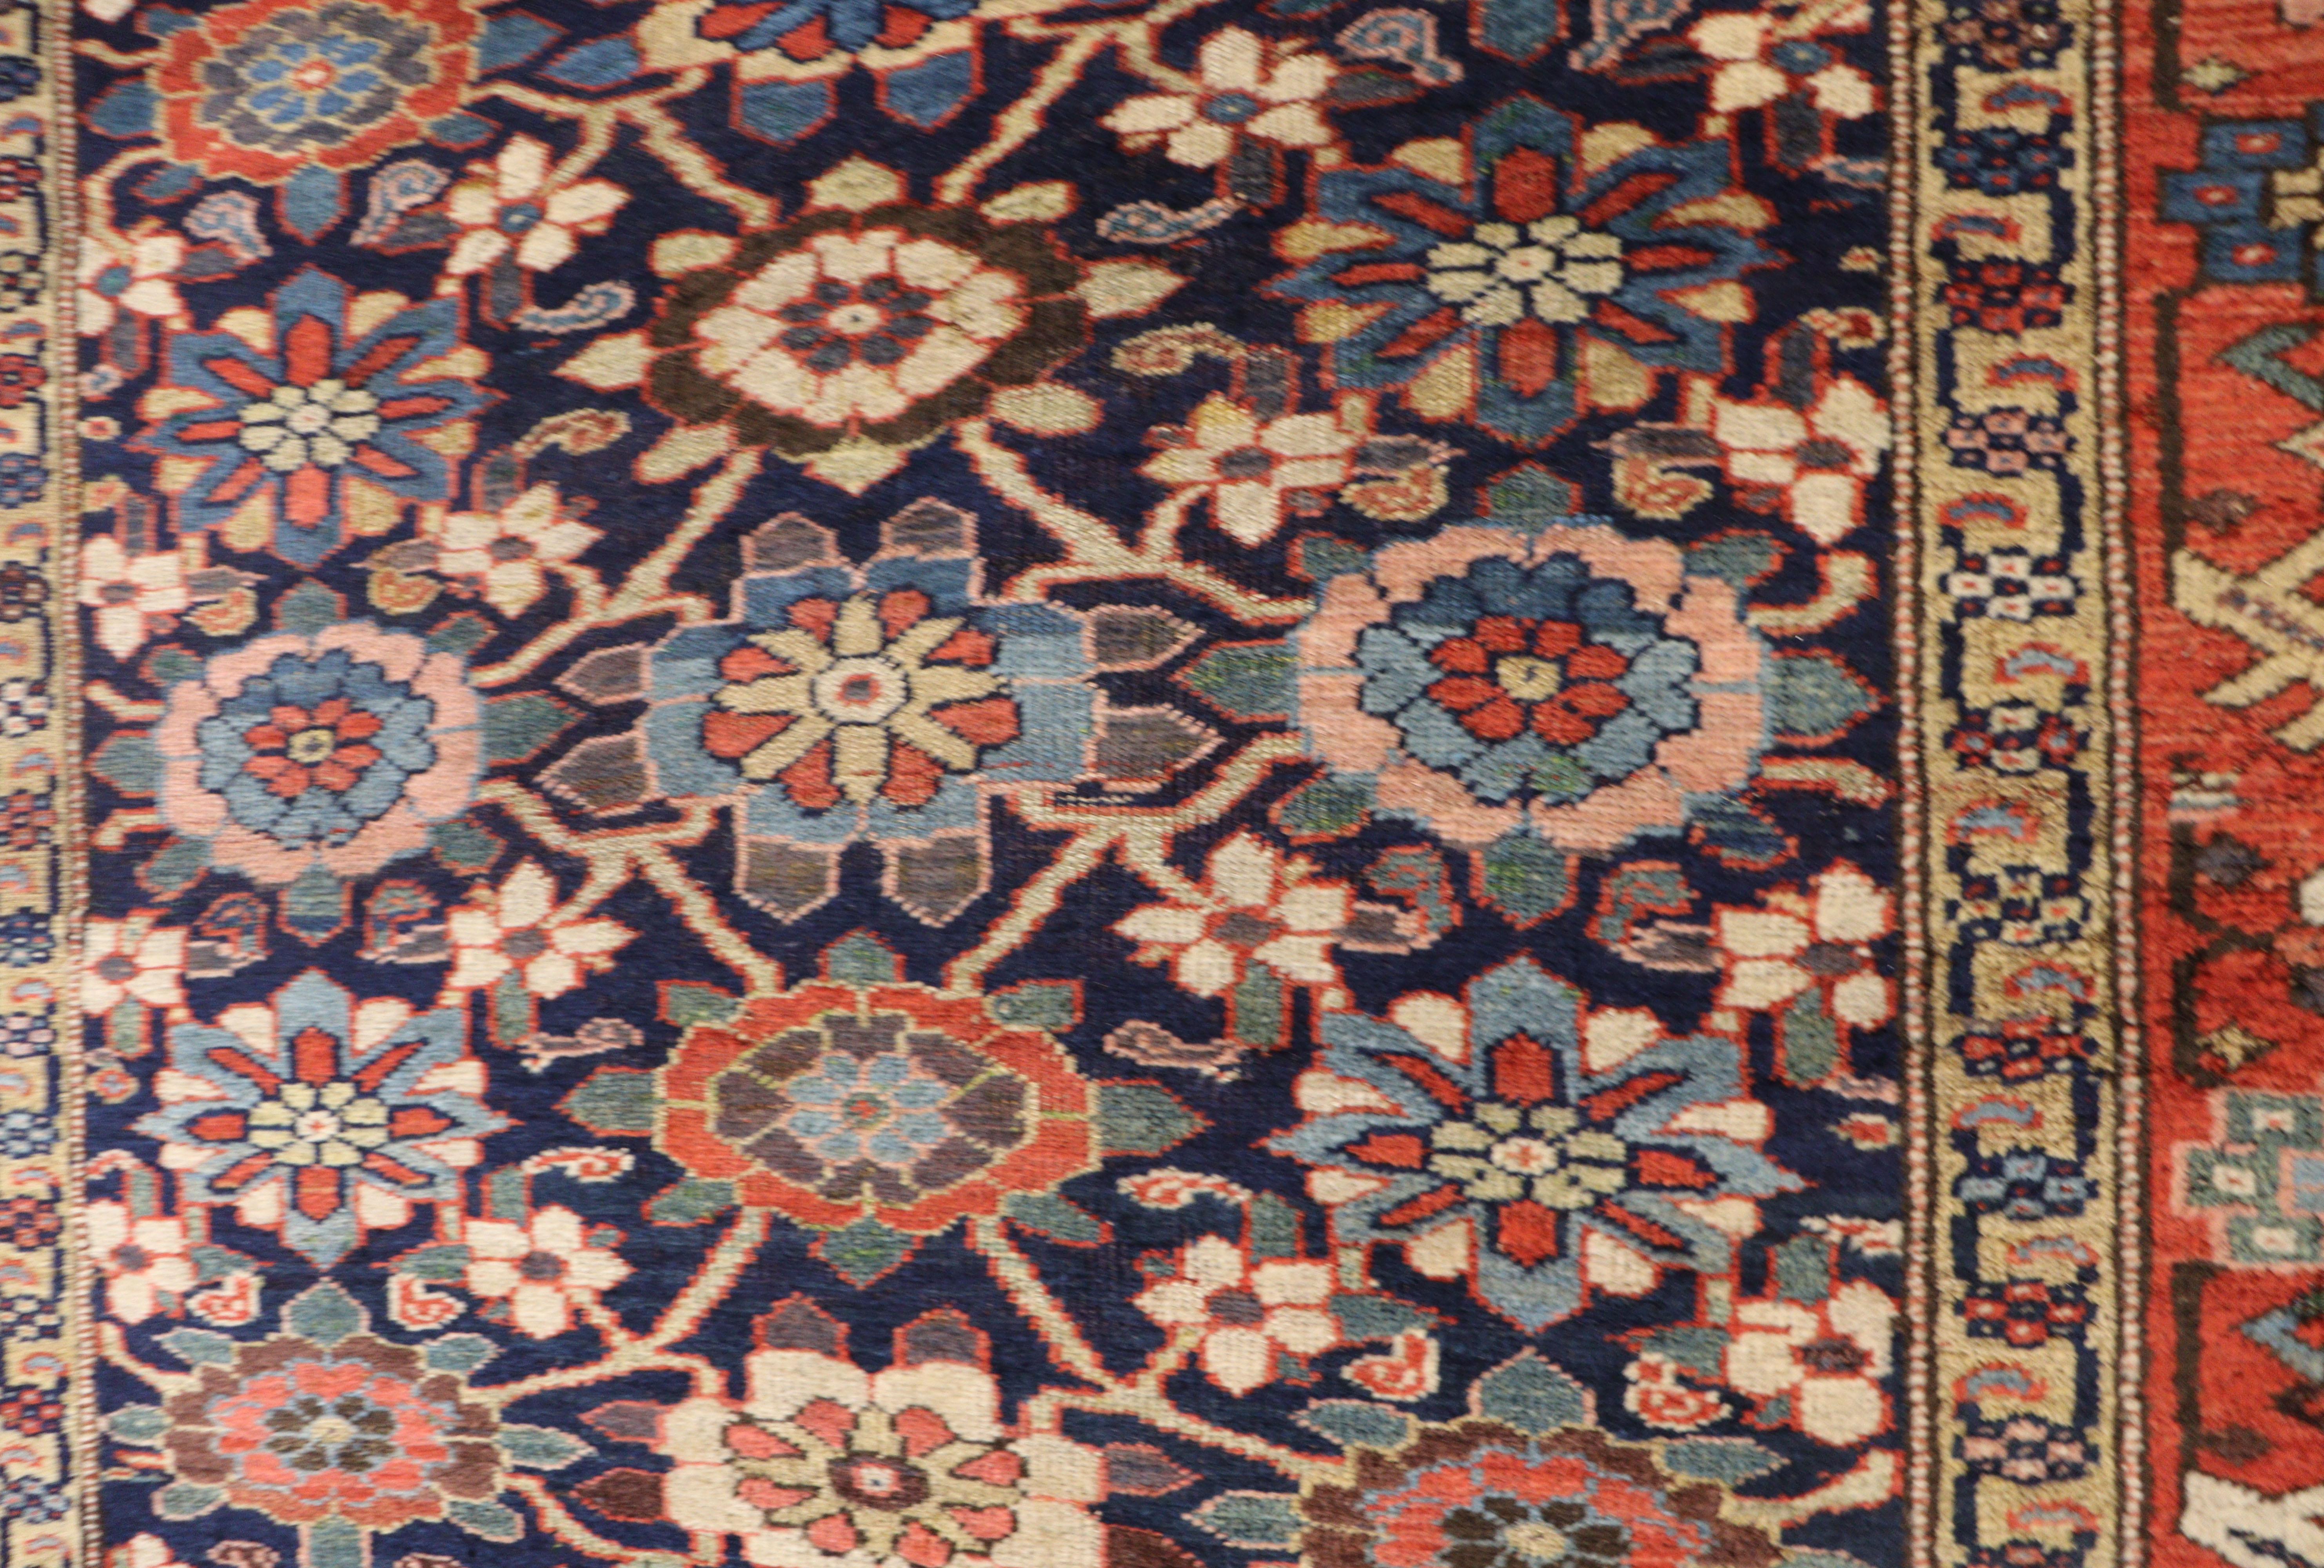 19th Century Antique Persian Tribal Bijar Halwai Gallery Carpet For Sale